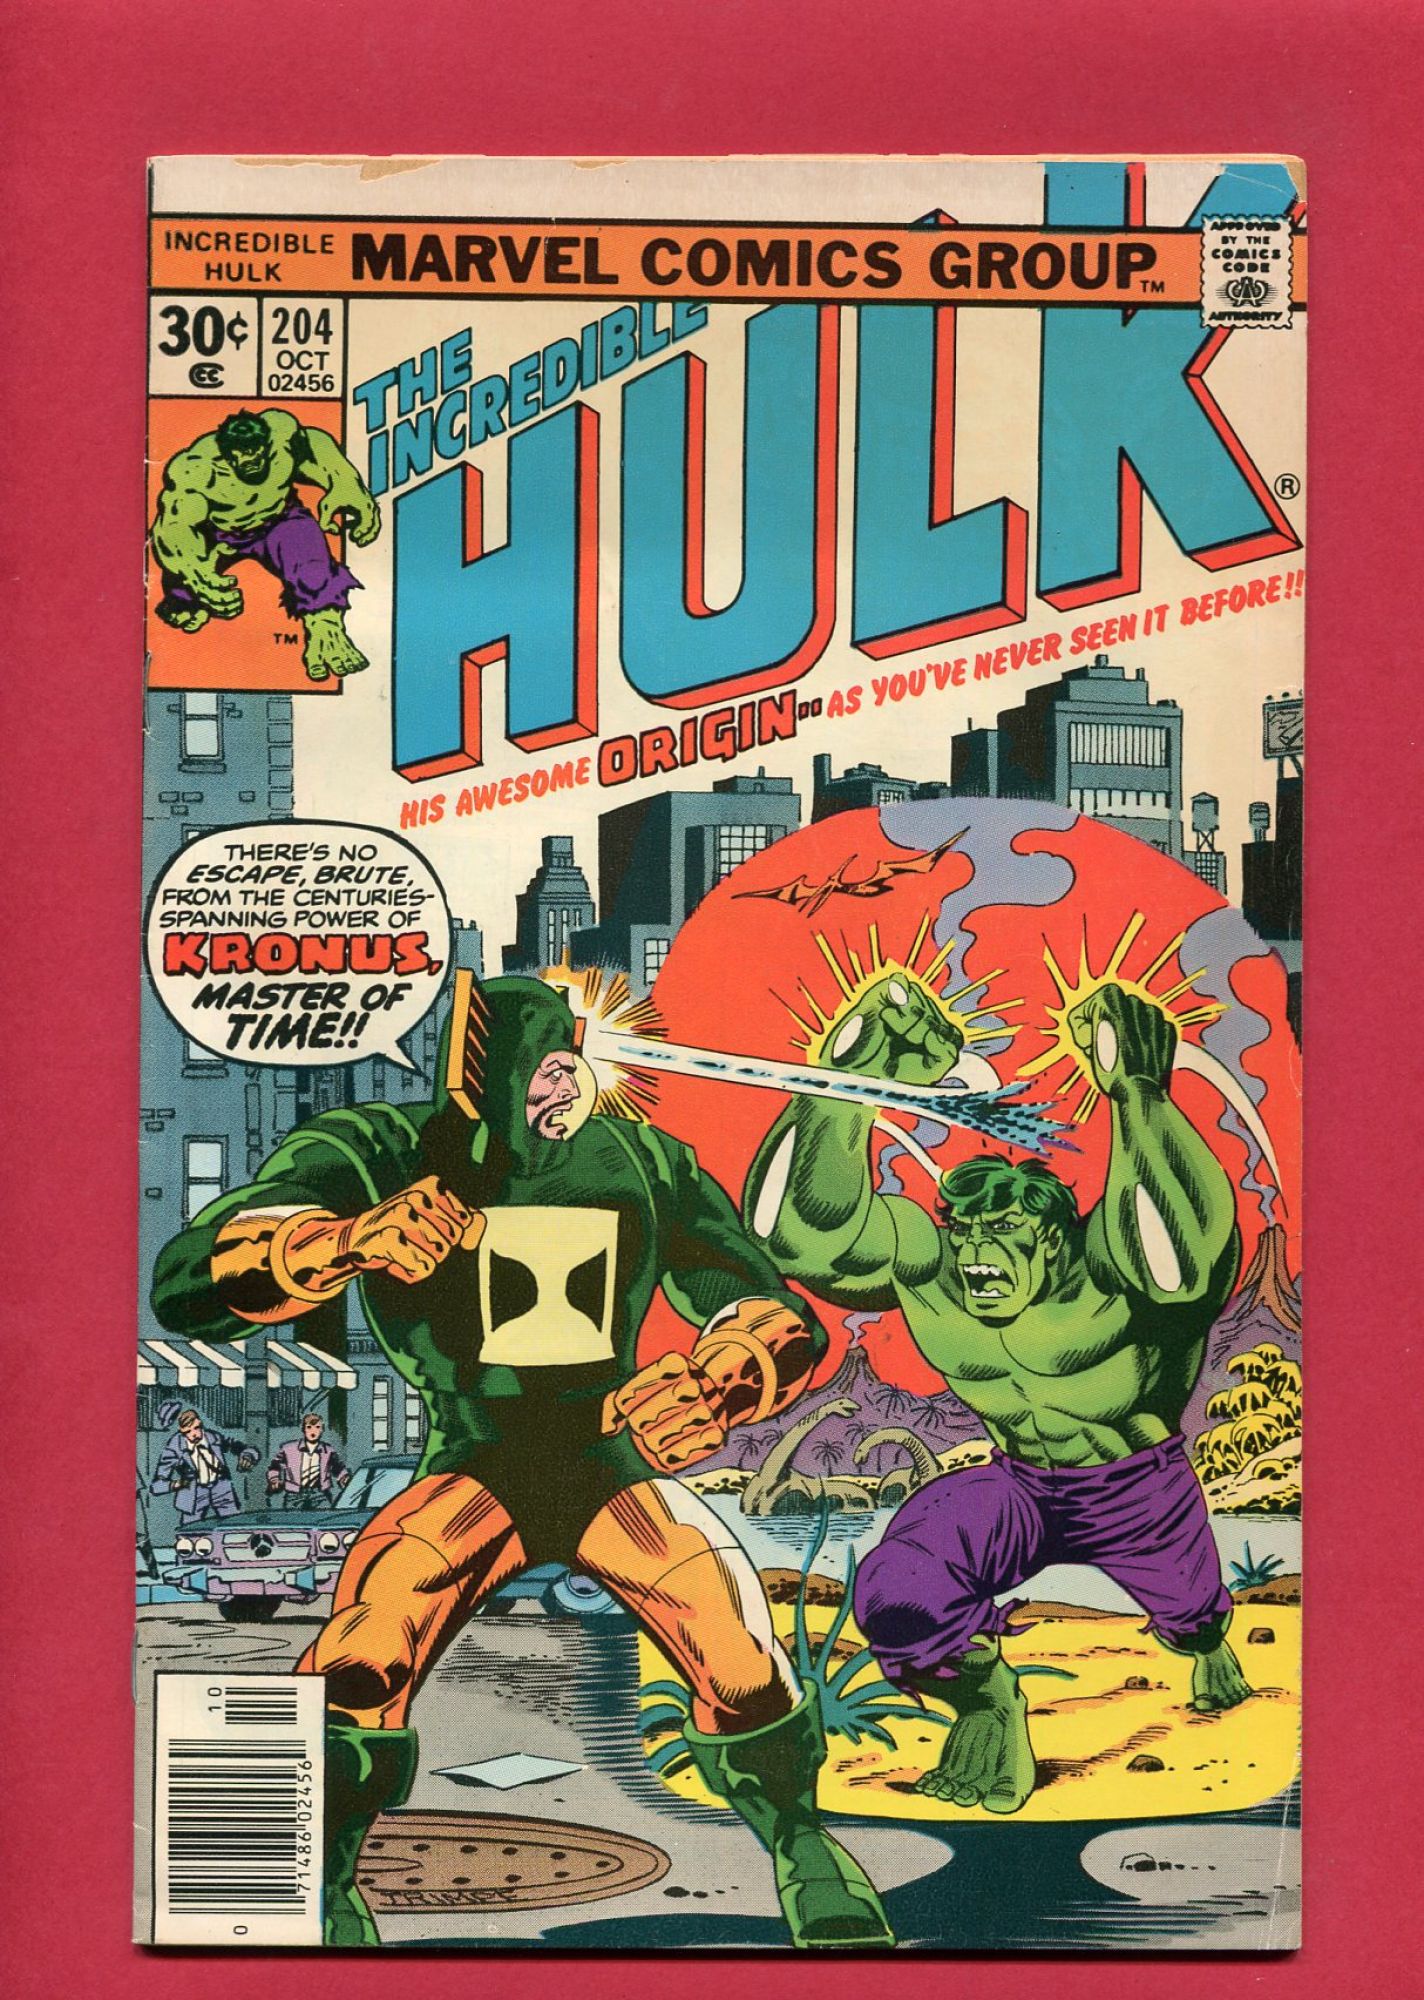 Incredible Hulk #204, Oct 1976, 3.5 VG-